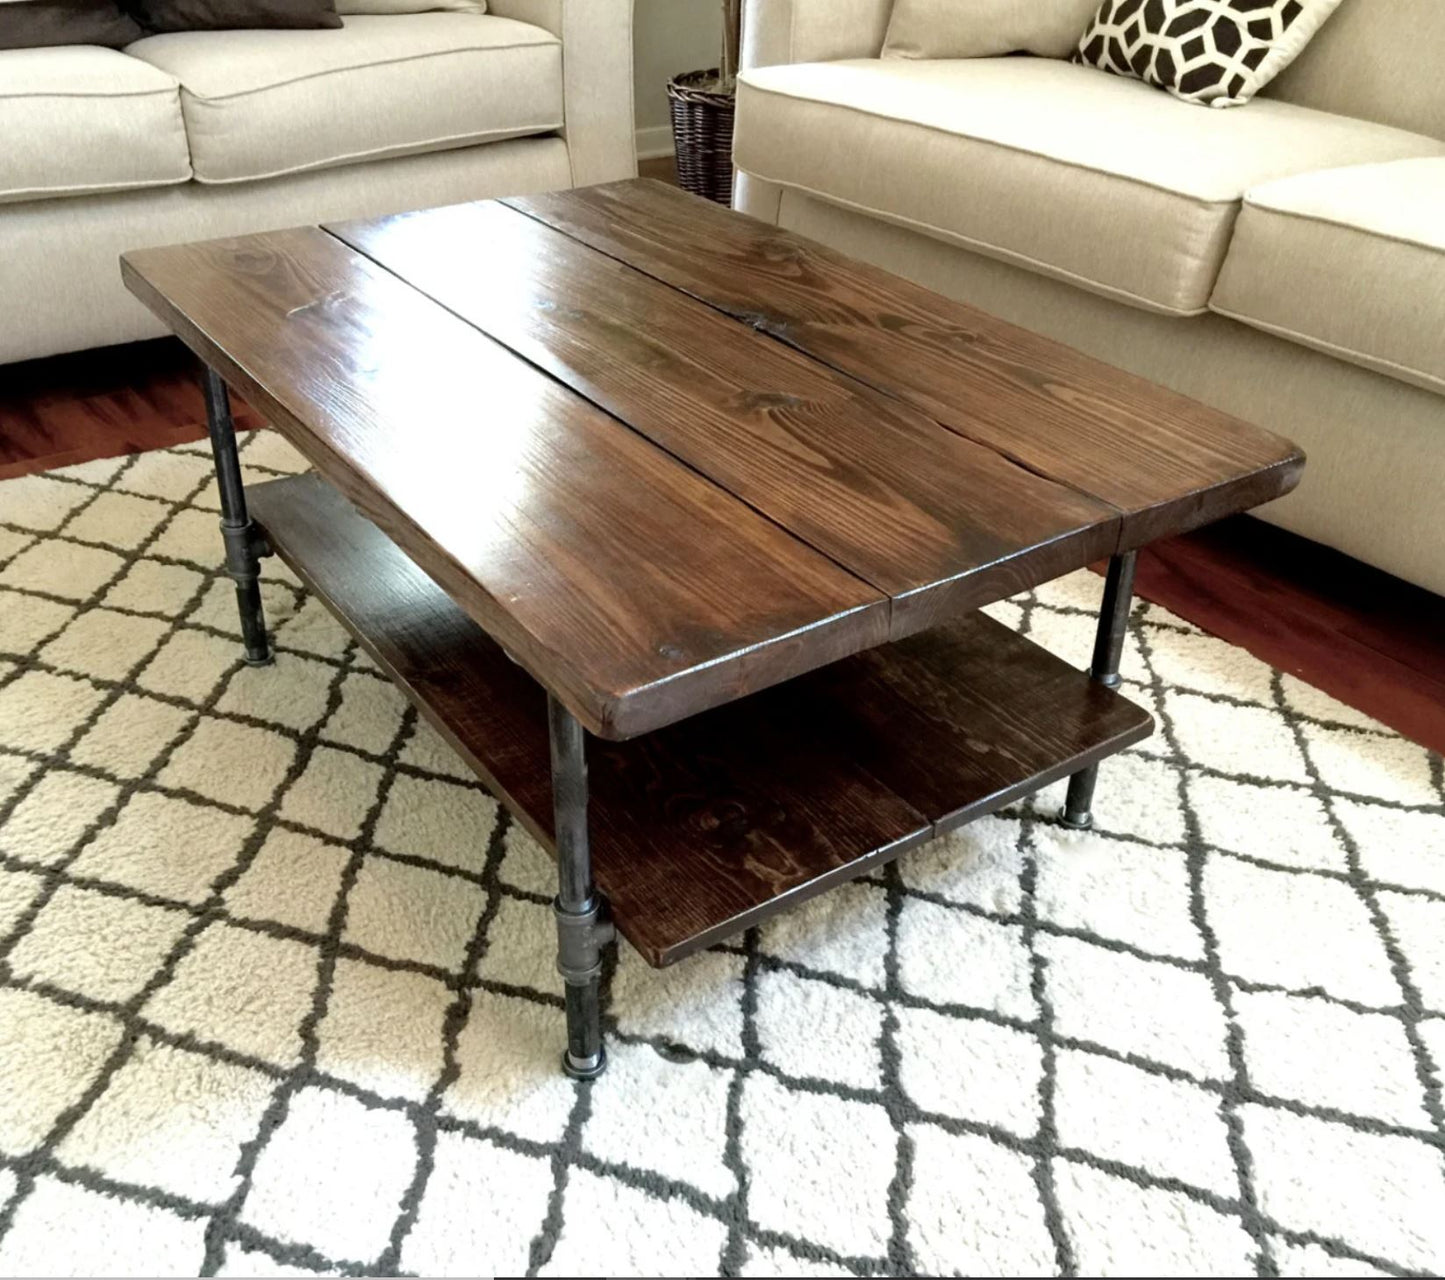 Custom Steel and Wood Coffee Table